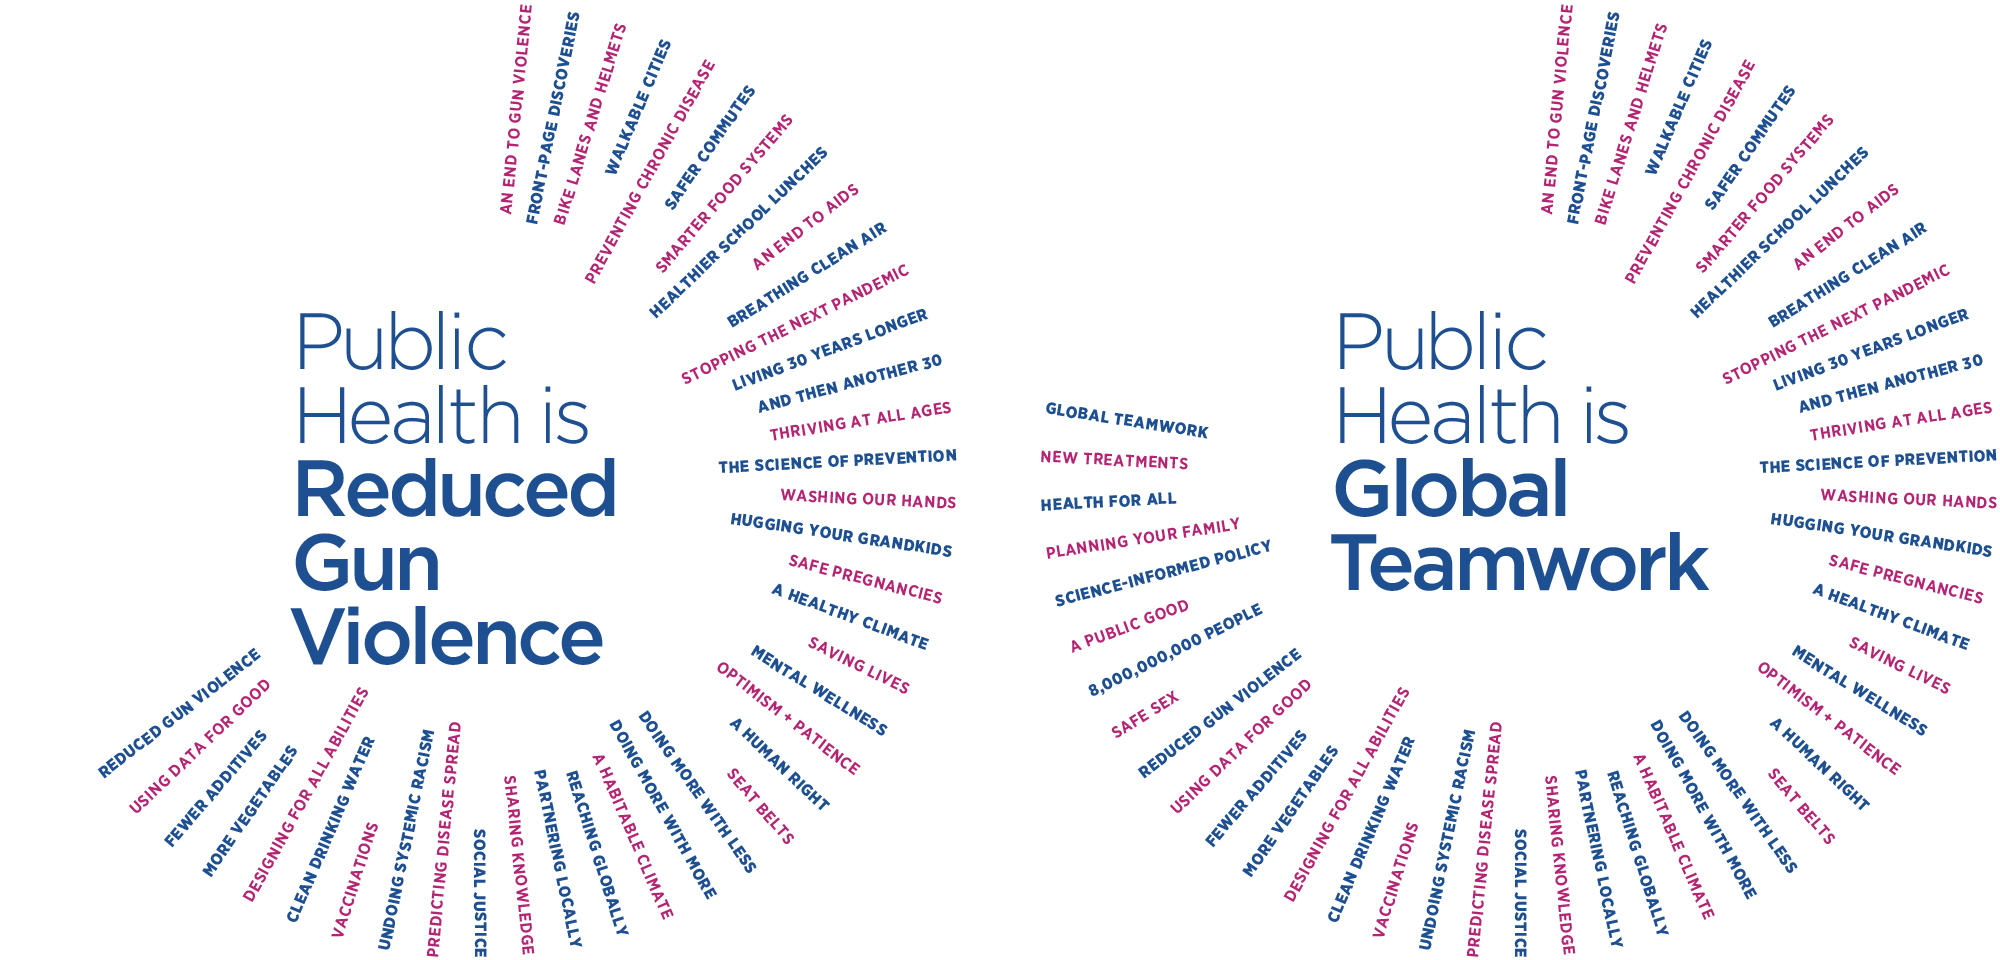 Logo build. Public Health is: 1. Reduced Gun Violence 2. Global Teamwork